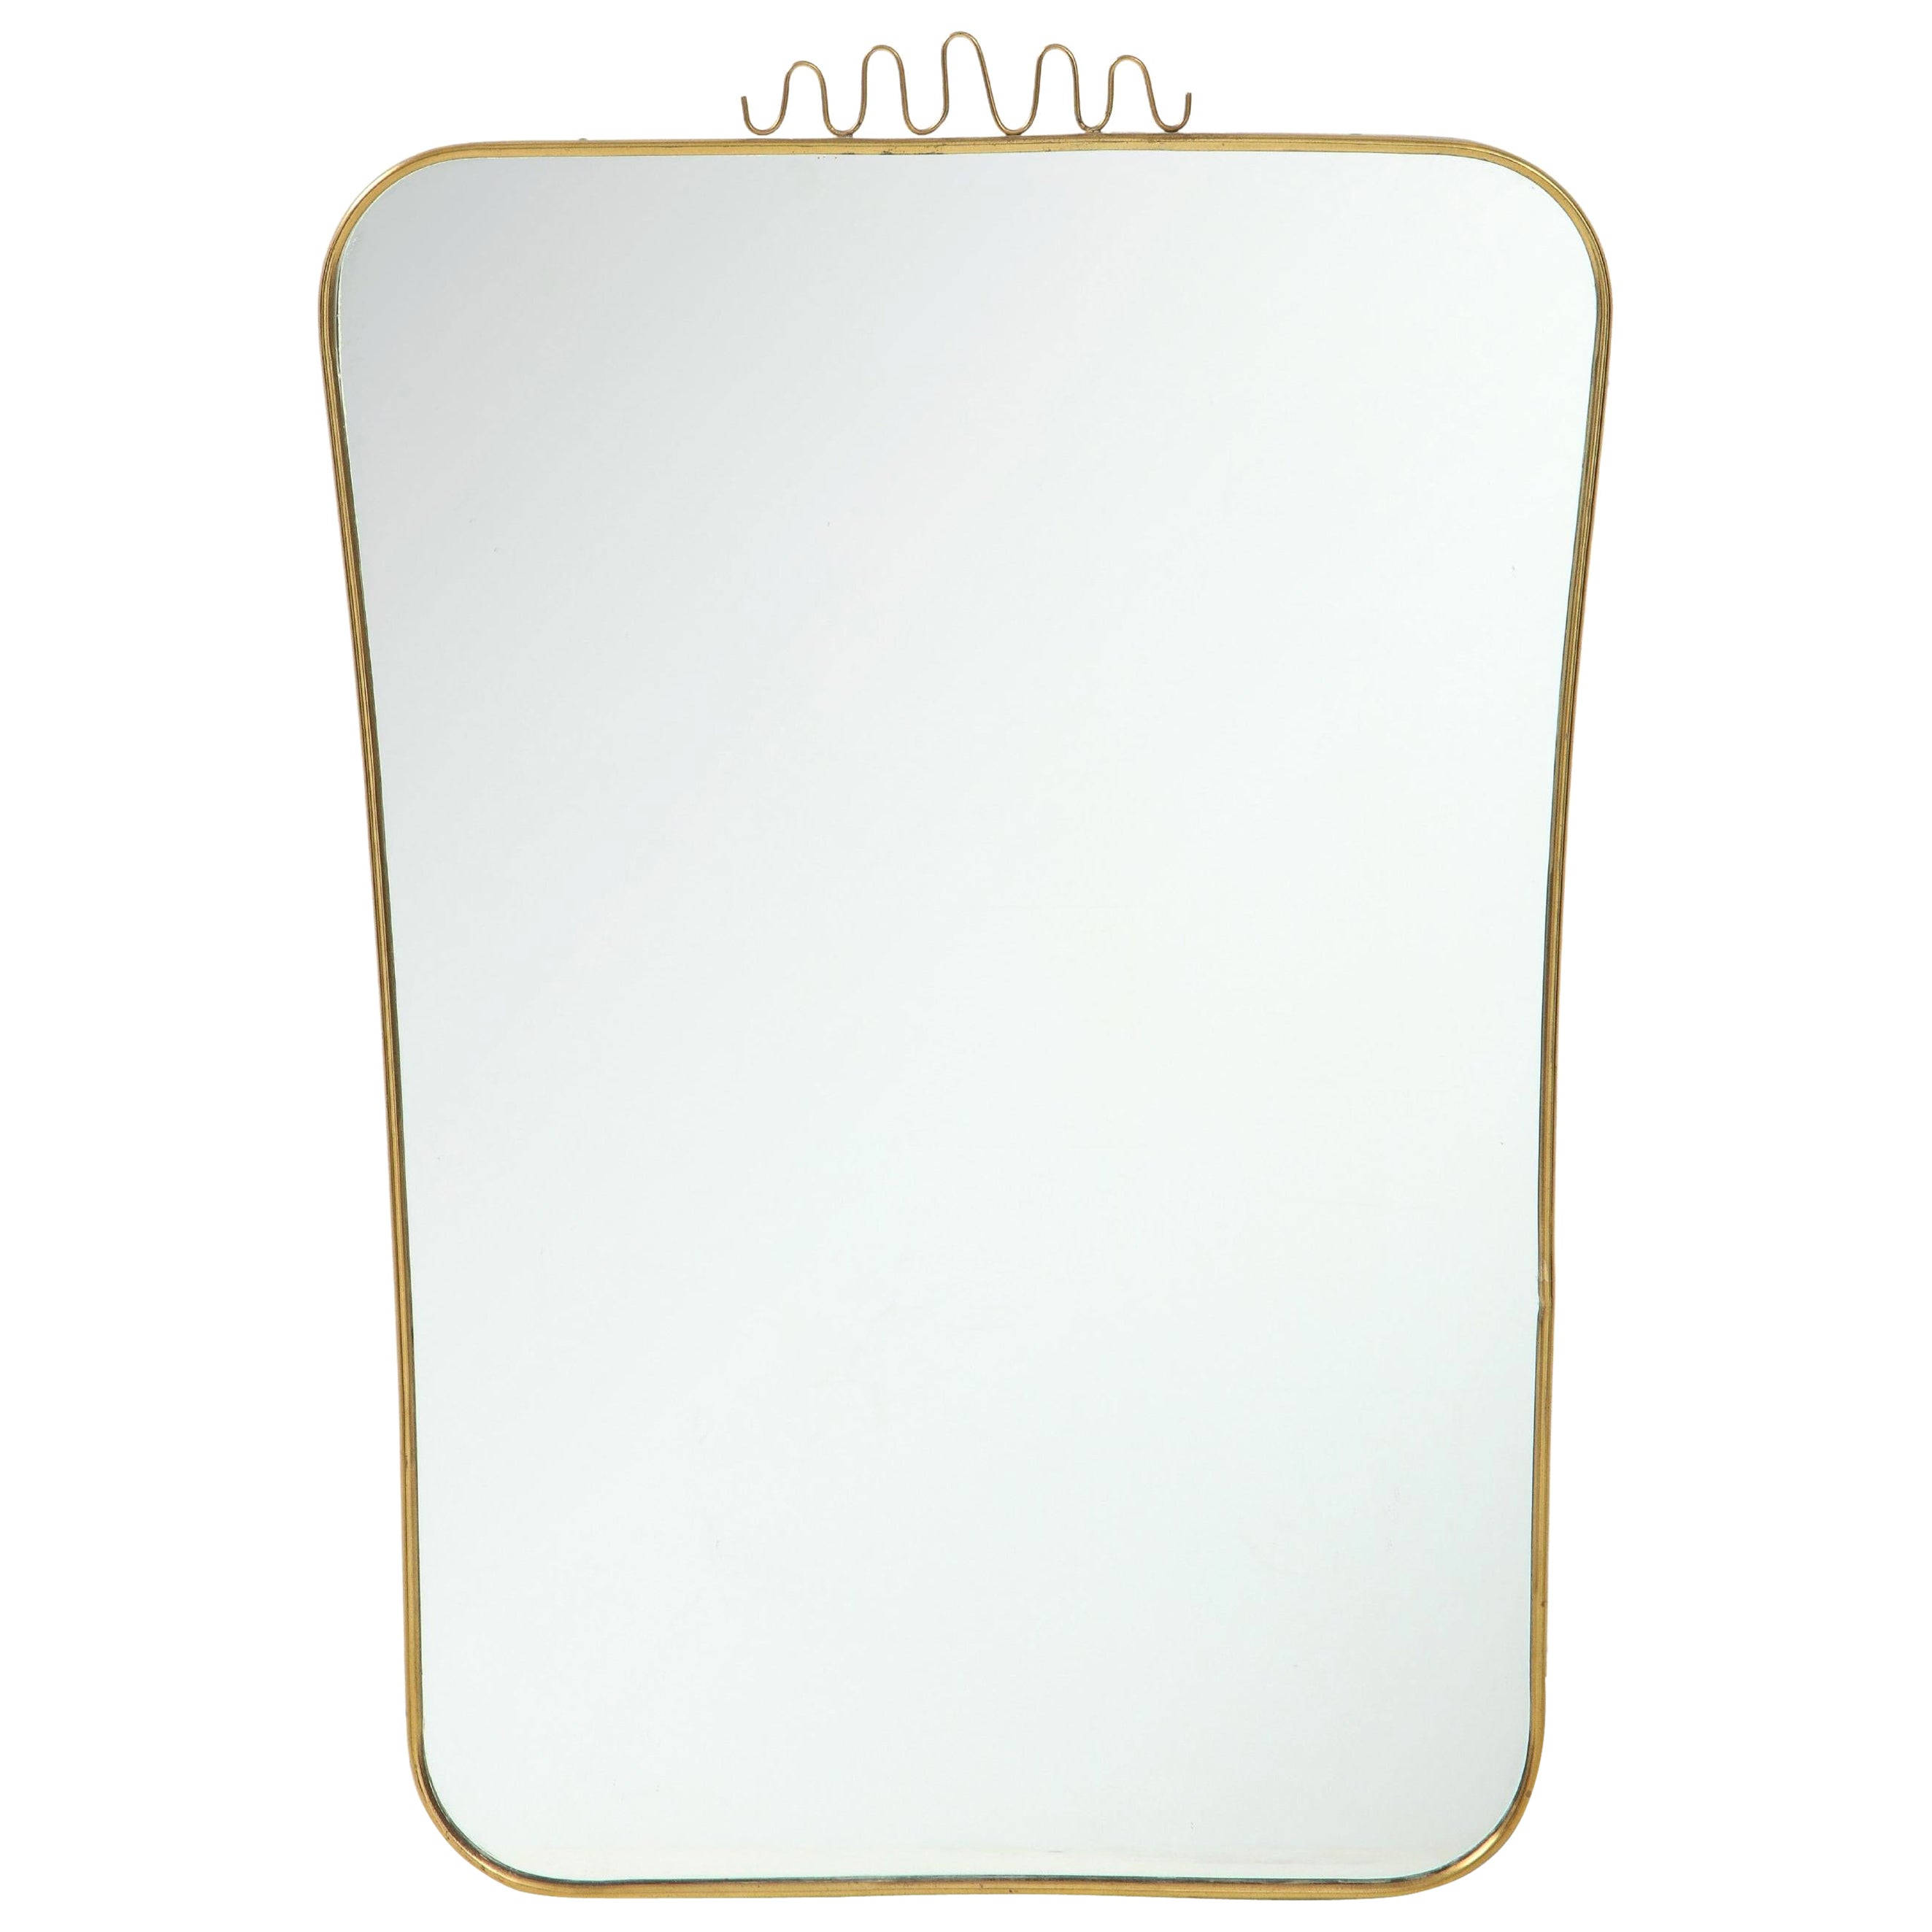 1960s Italian Modernist Brass Wall Mirror